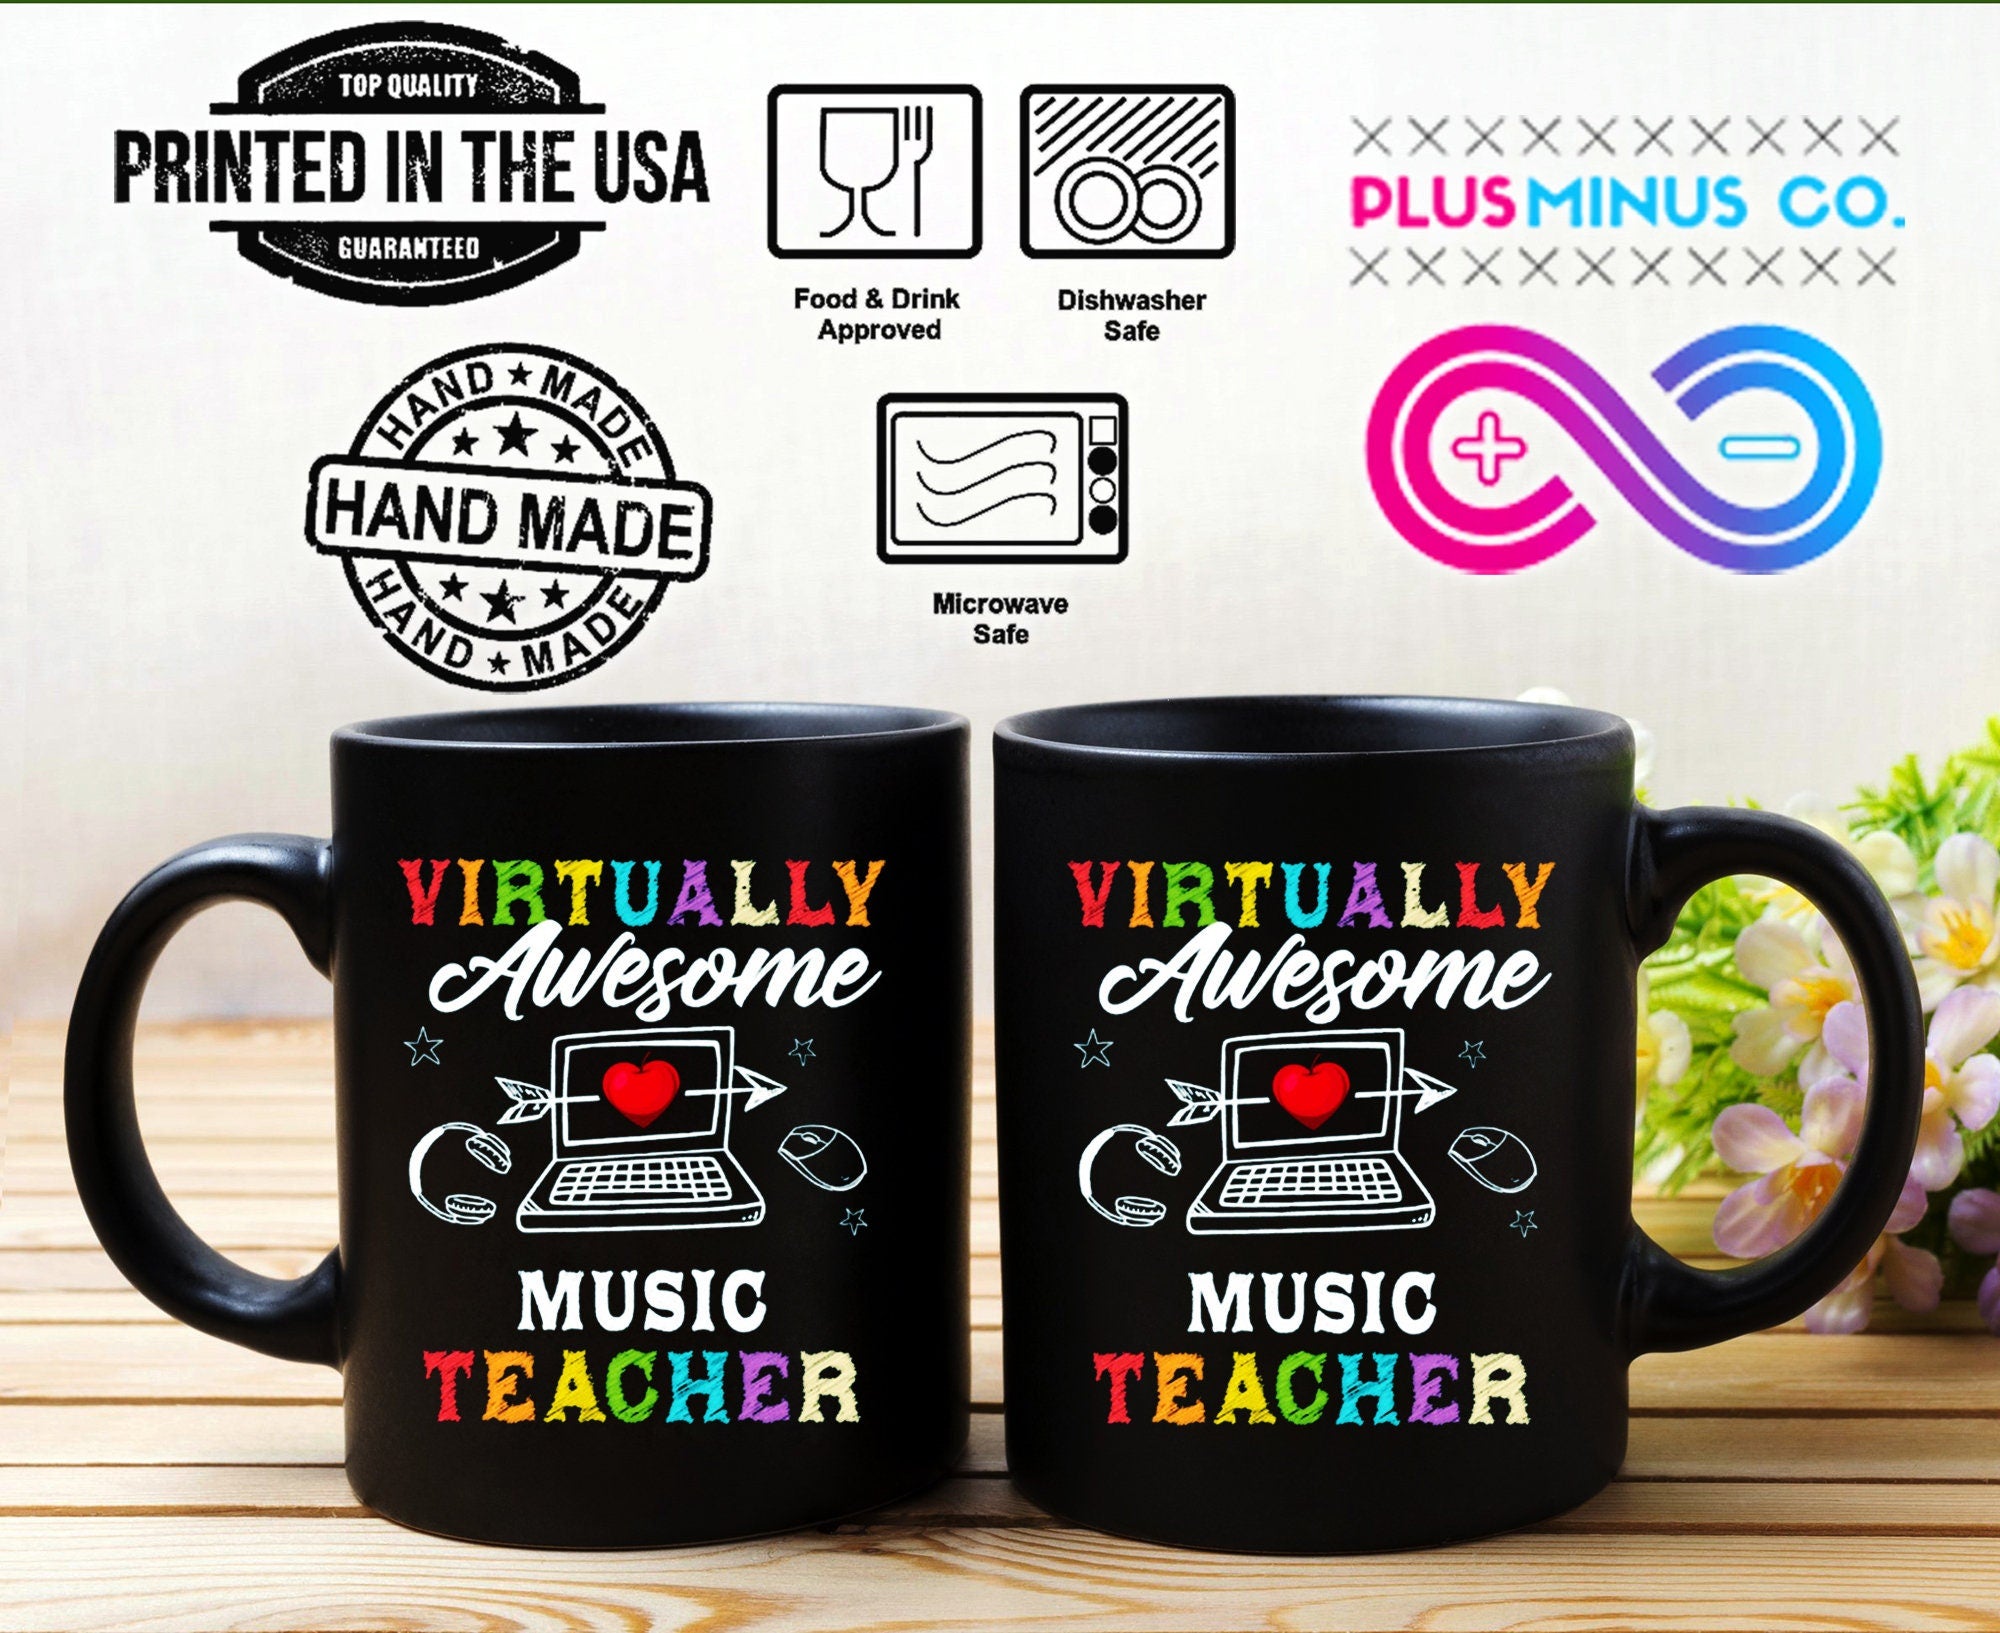 Virtually Awesome Music Teacher Black Mugs regalo de cumpleaños para maestros, regreso a clases, regalos personalizados para maestros - plusminusco.com